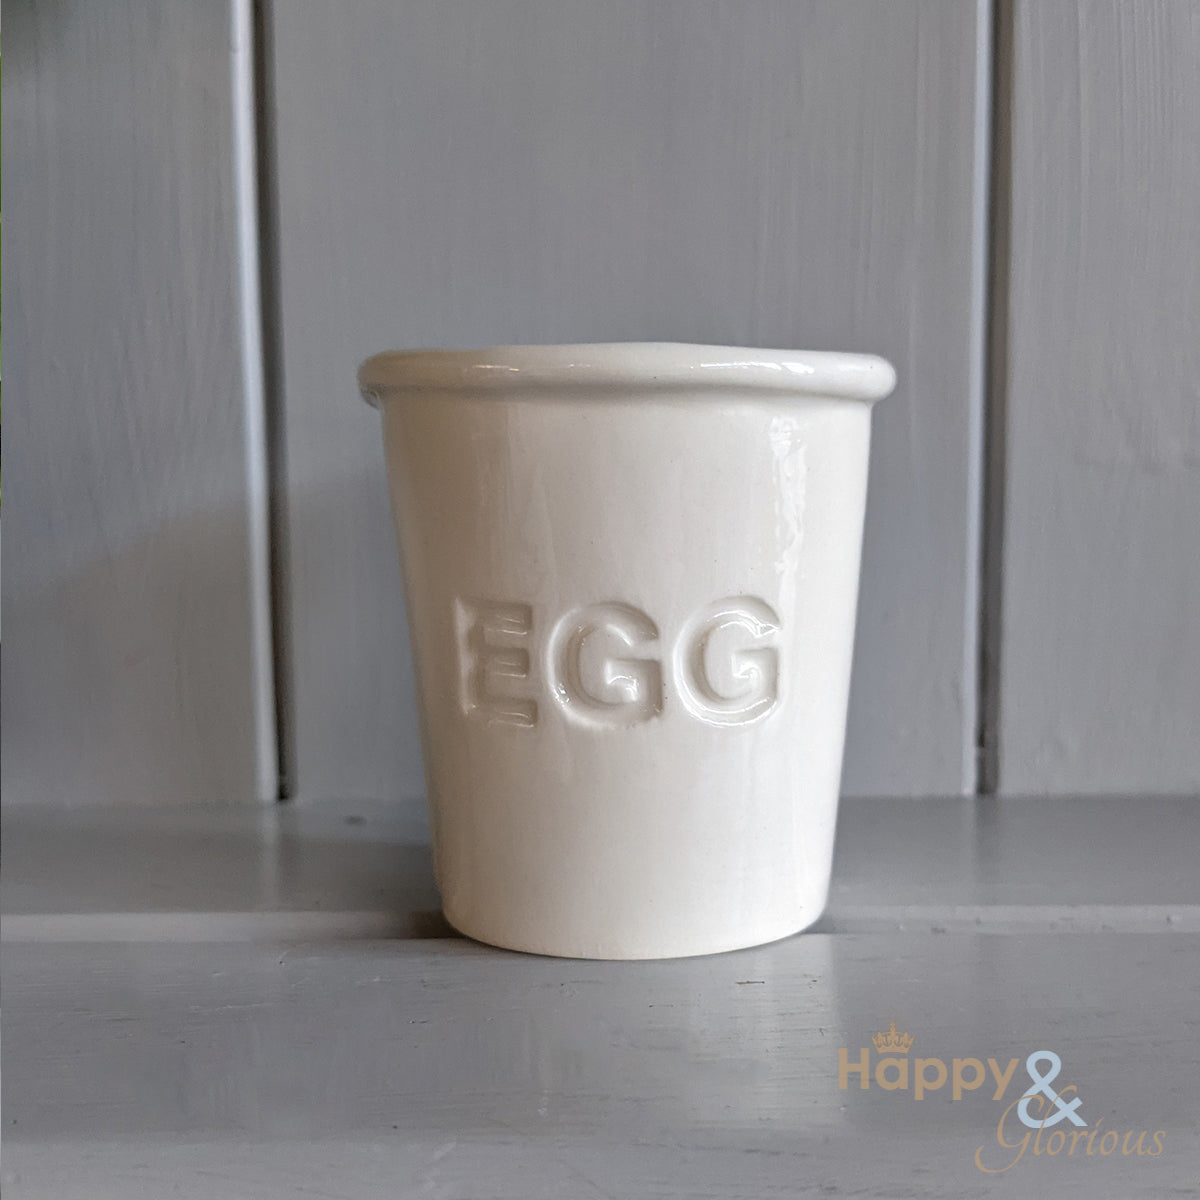 Ceramic egg cup by Katie Brinsley